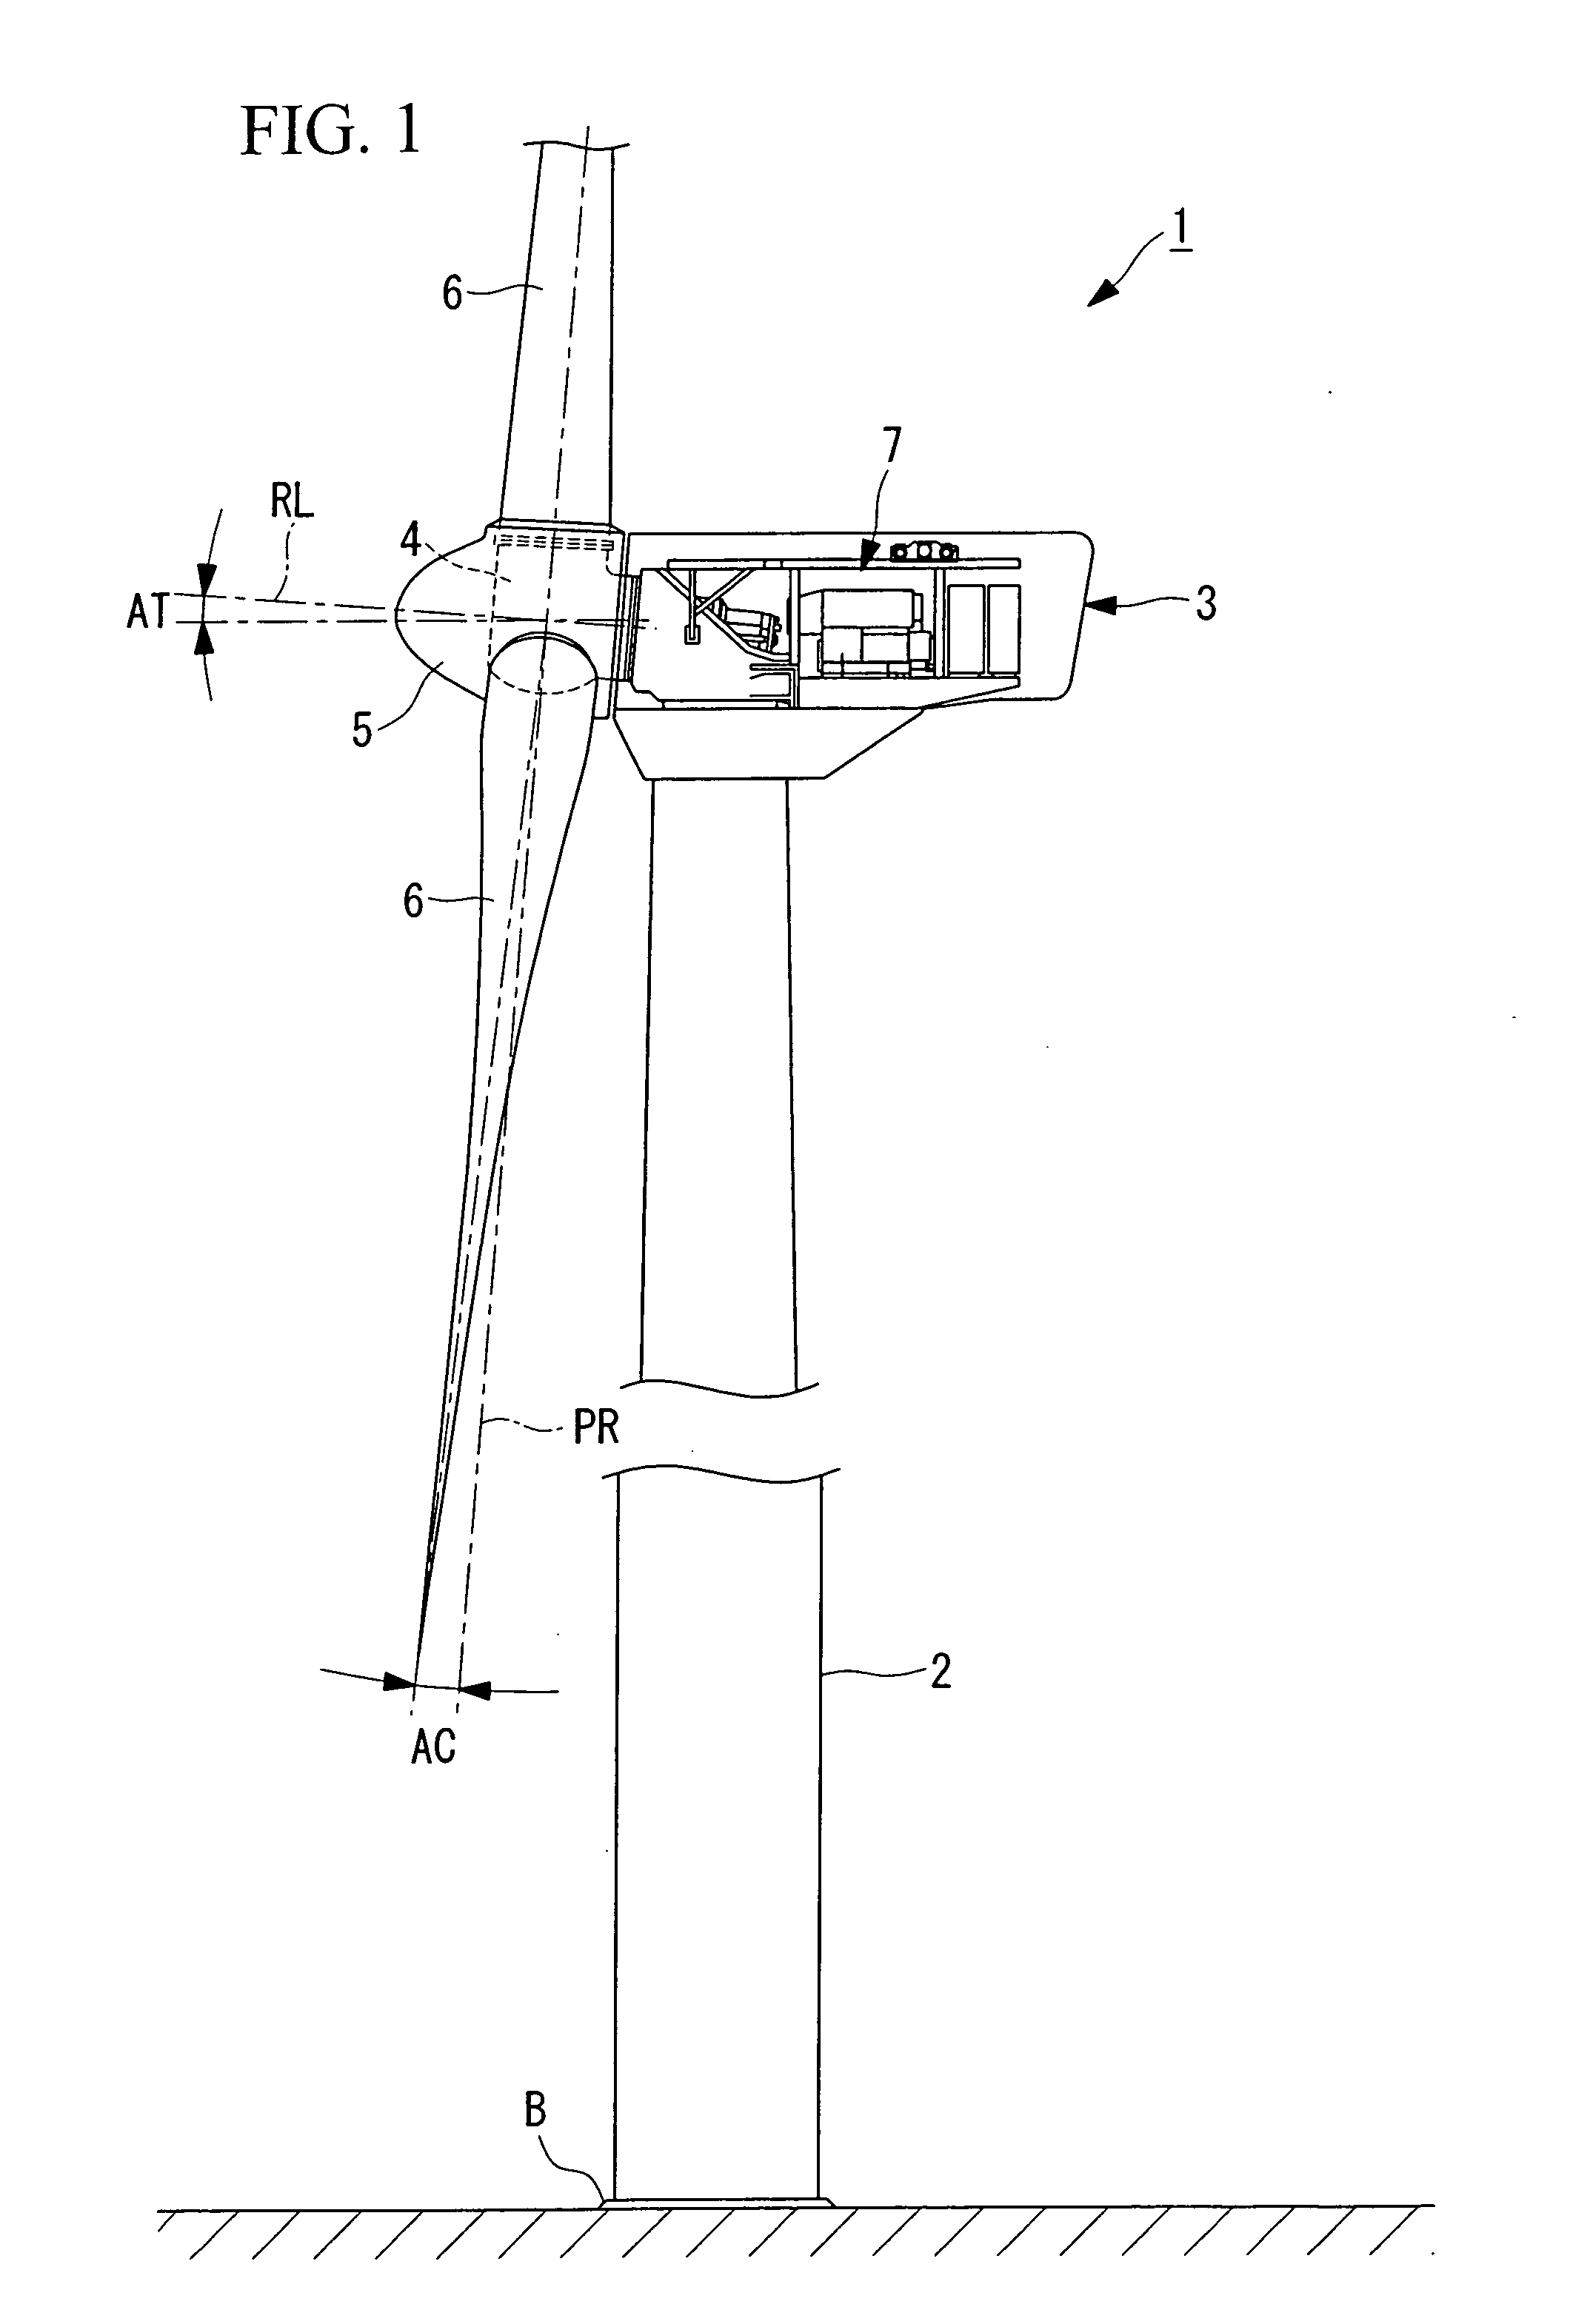 Wind-turbine rotor-blade hoisting apparatus, method for attaching wind-turbine rotor blade, and method for constructing wind power generator